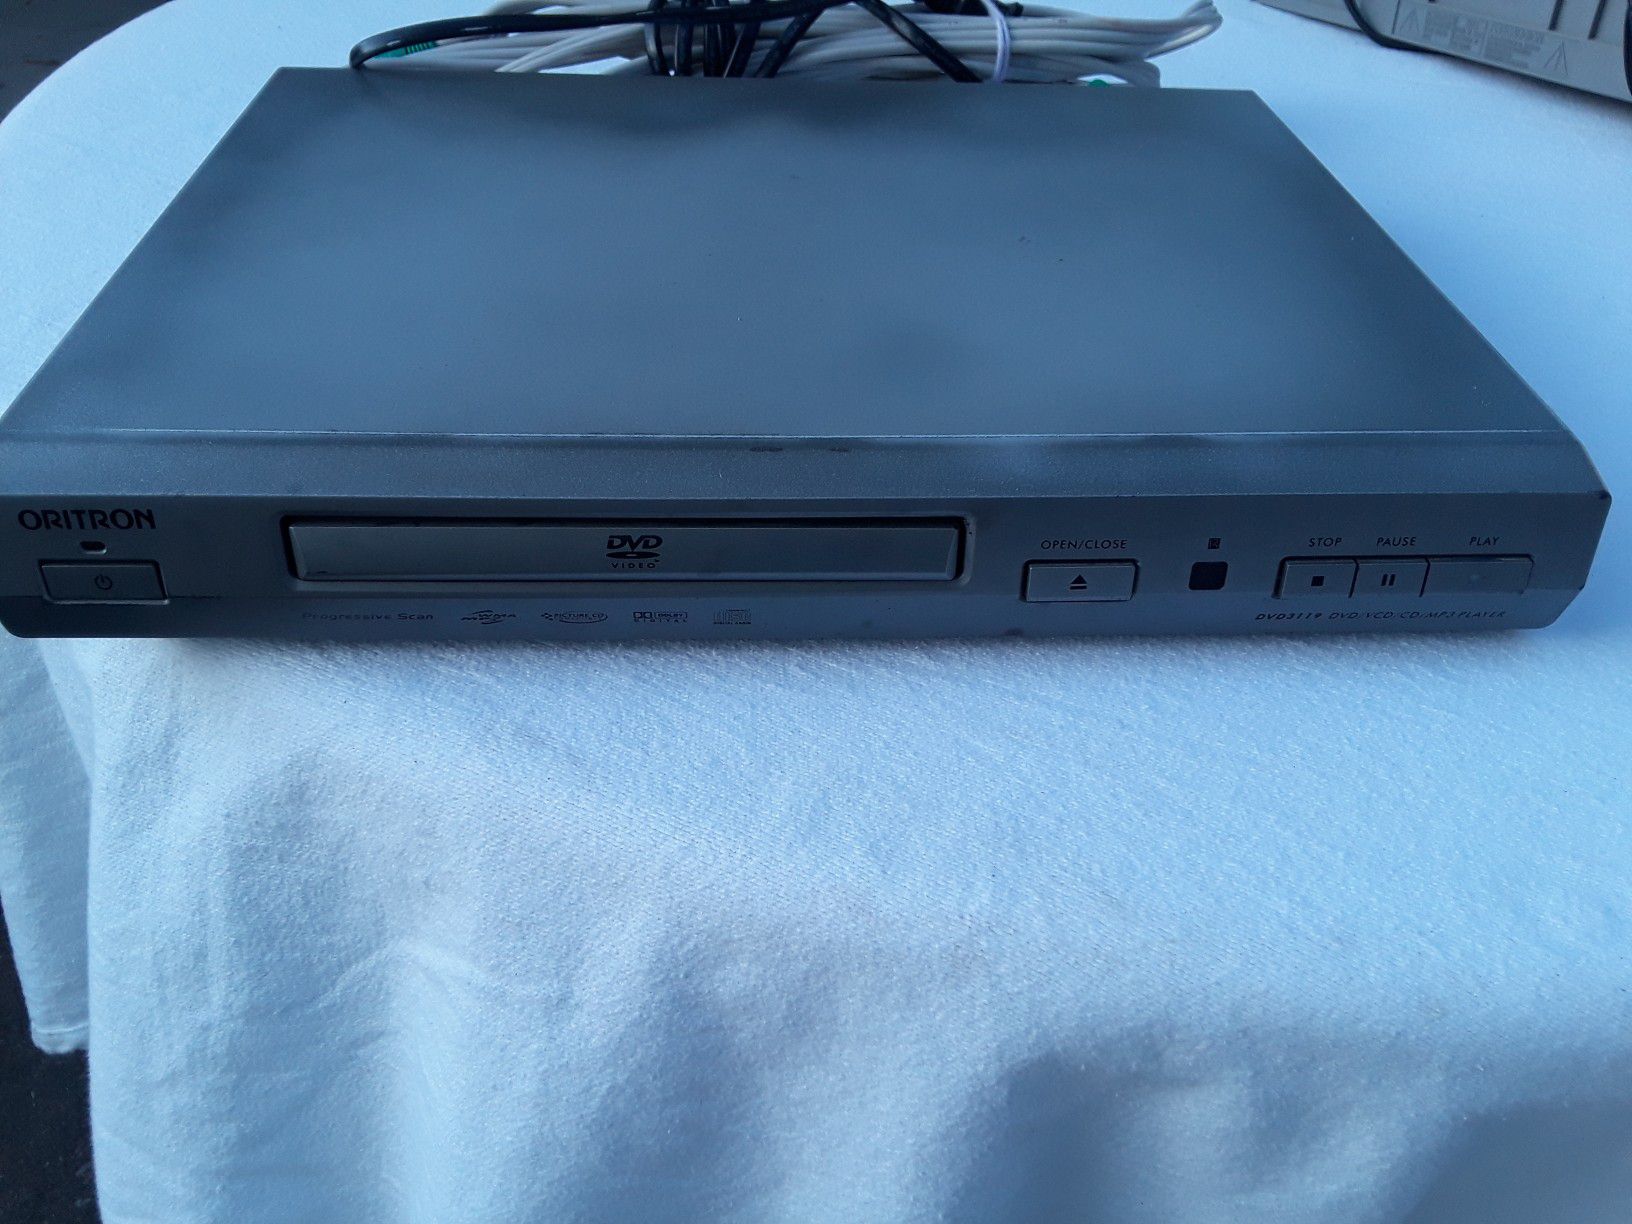 Oritron dvd player no remote model dvd3119